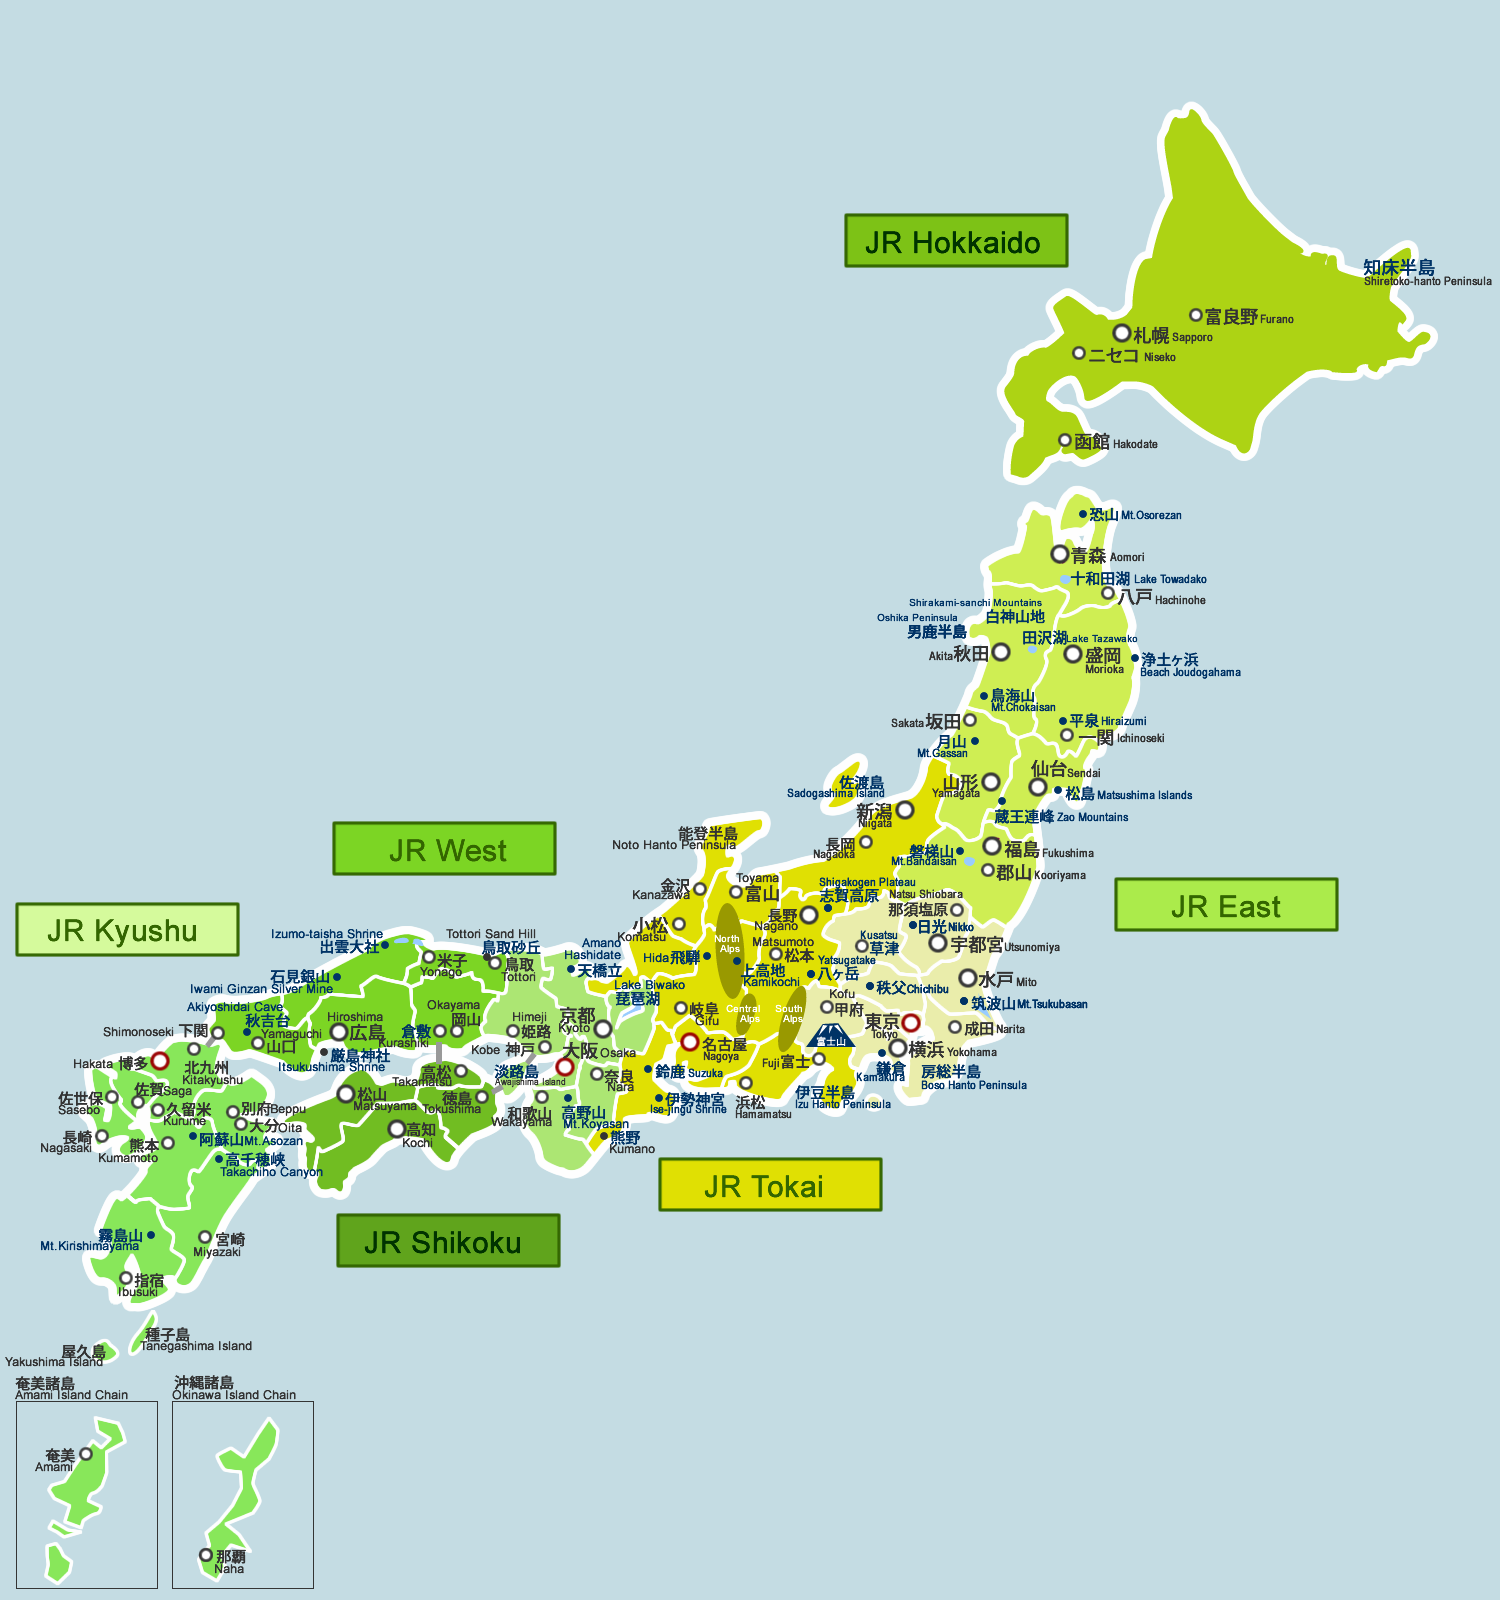 Maps of Japan : Cities, Prefectures | digi-joho Japan TOKYO BUSINESS